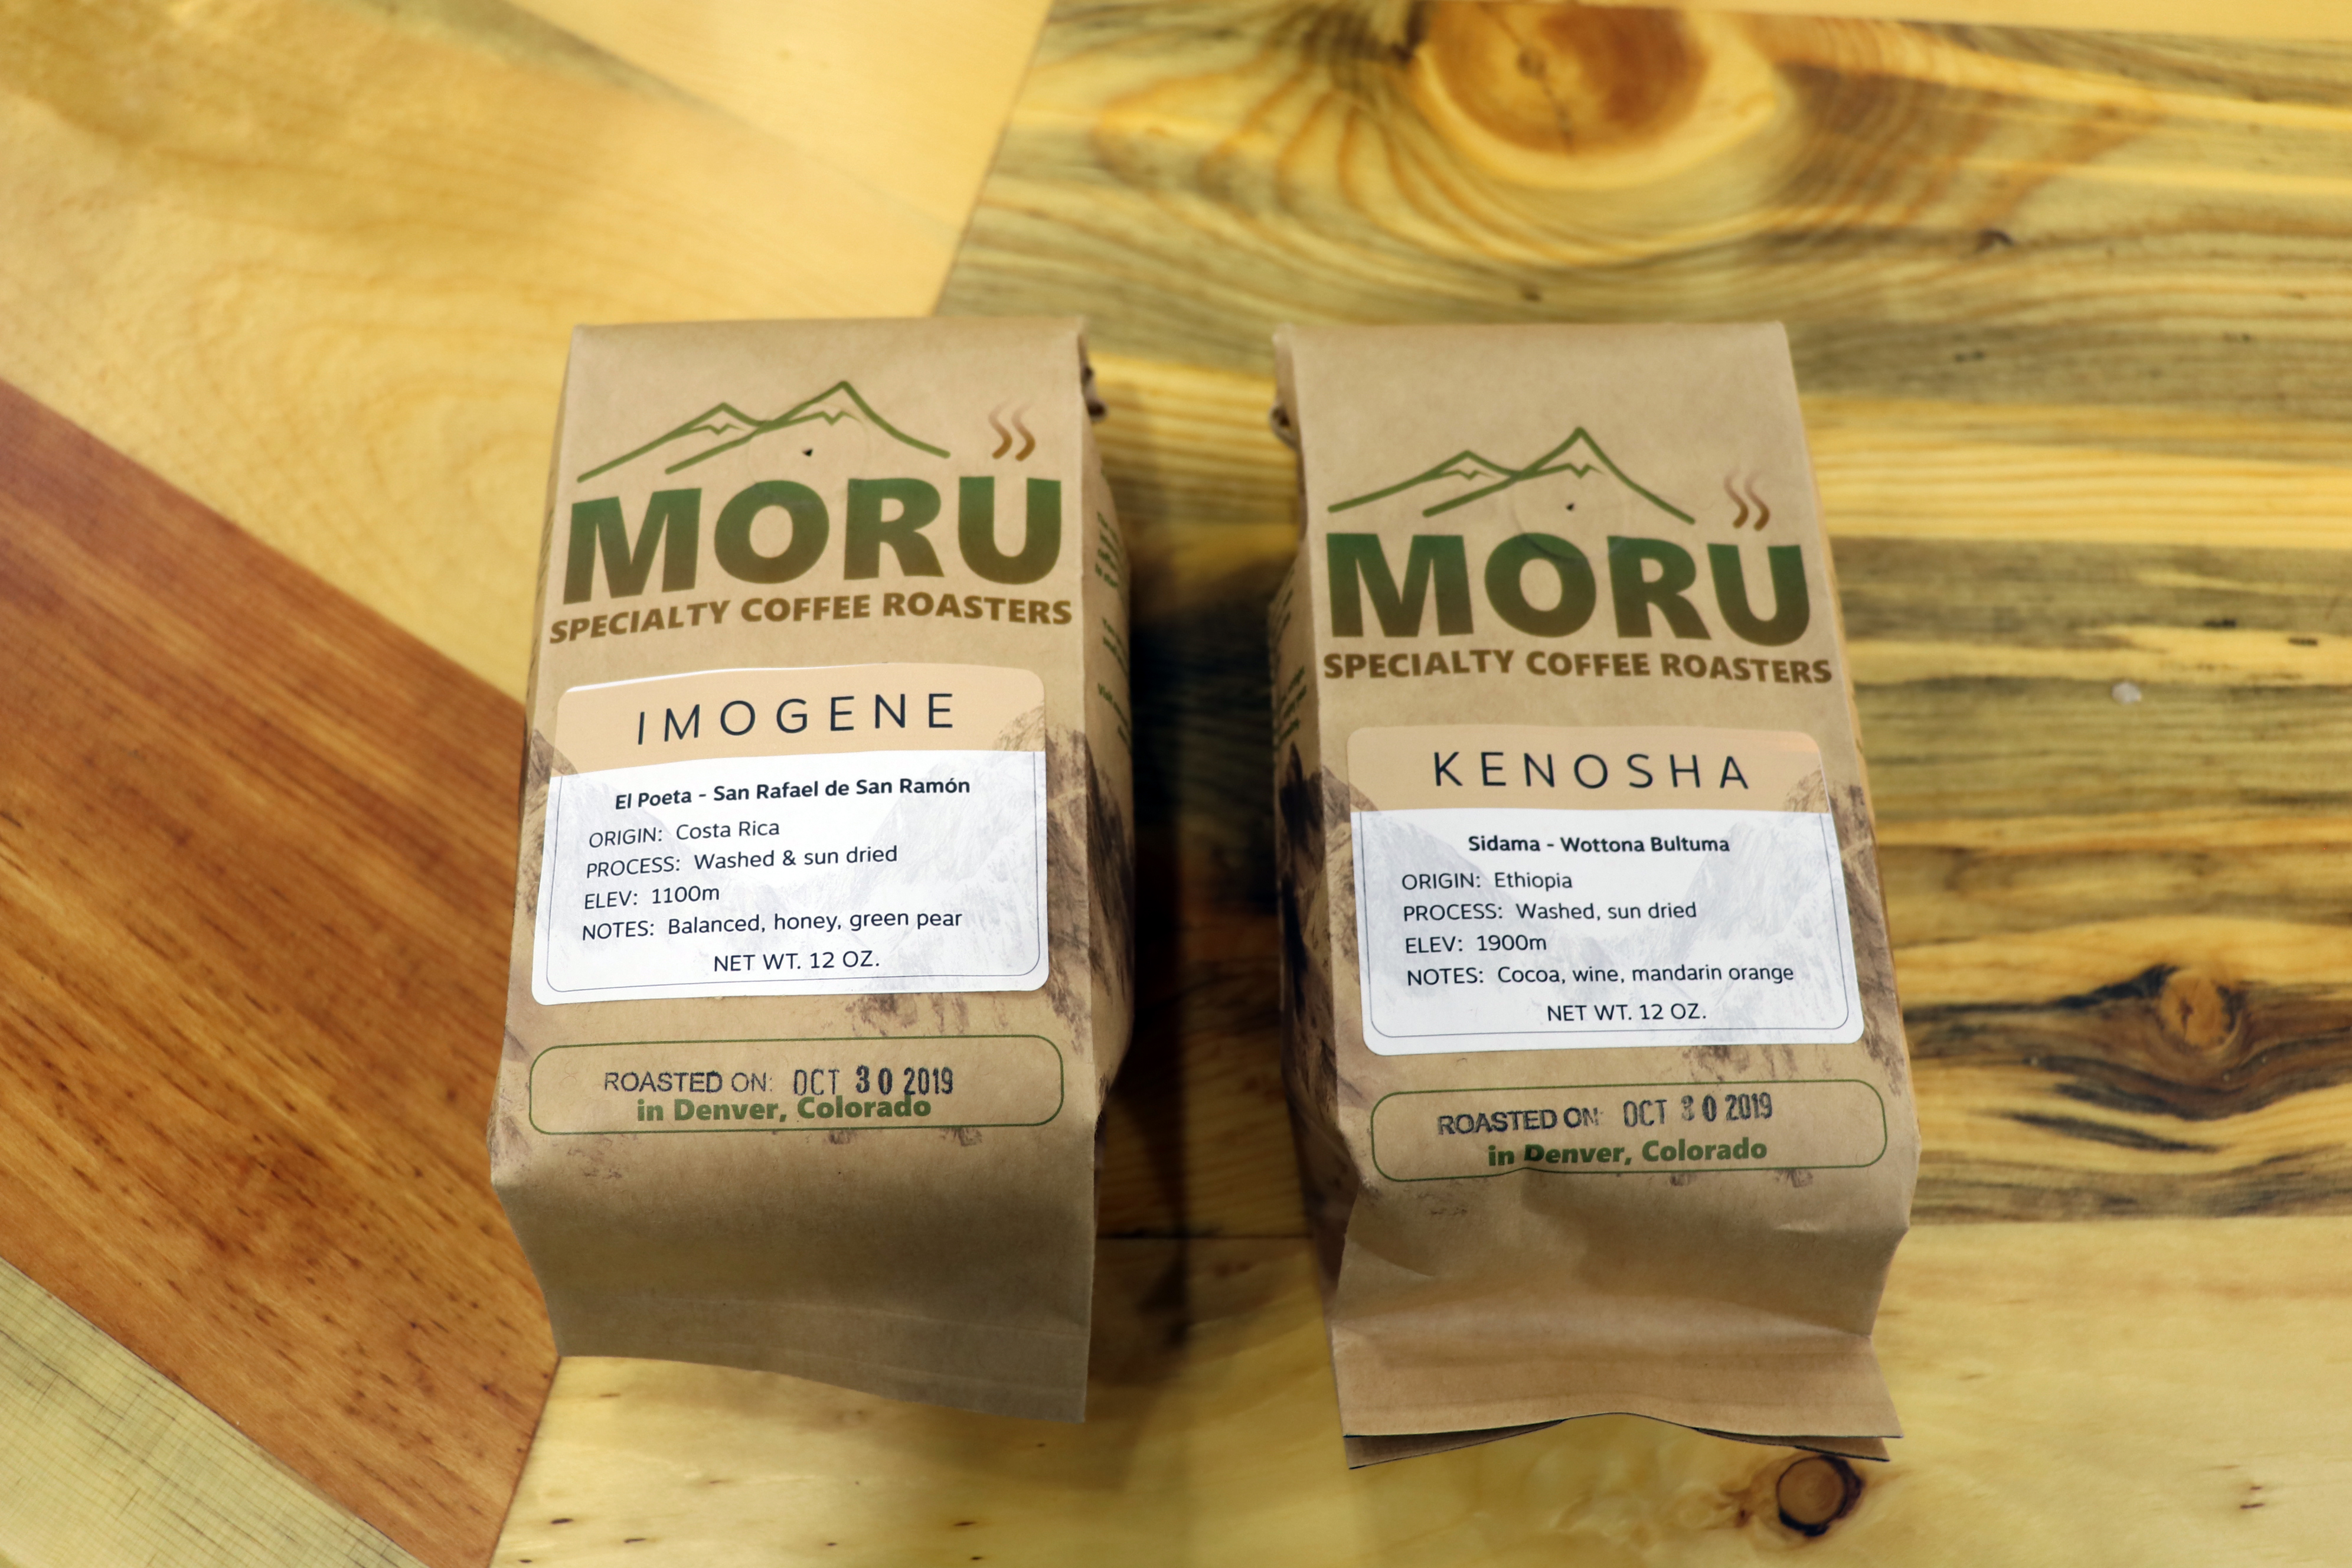 Moru Coffee bags.